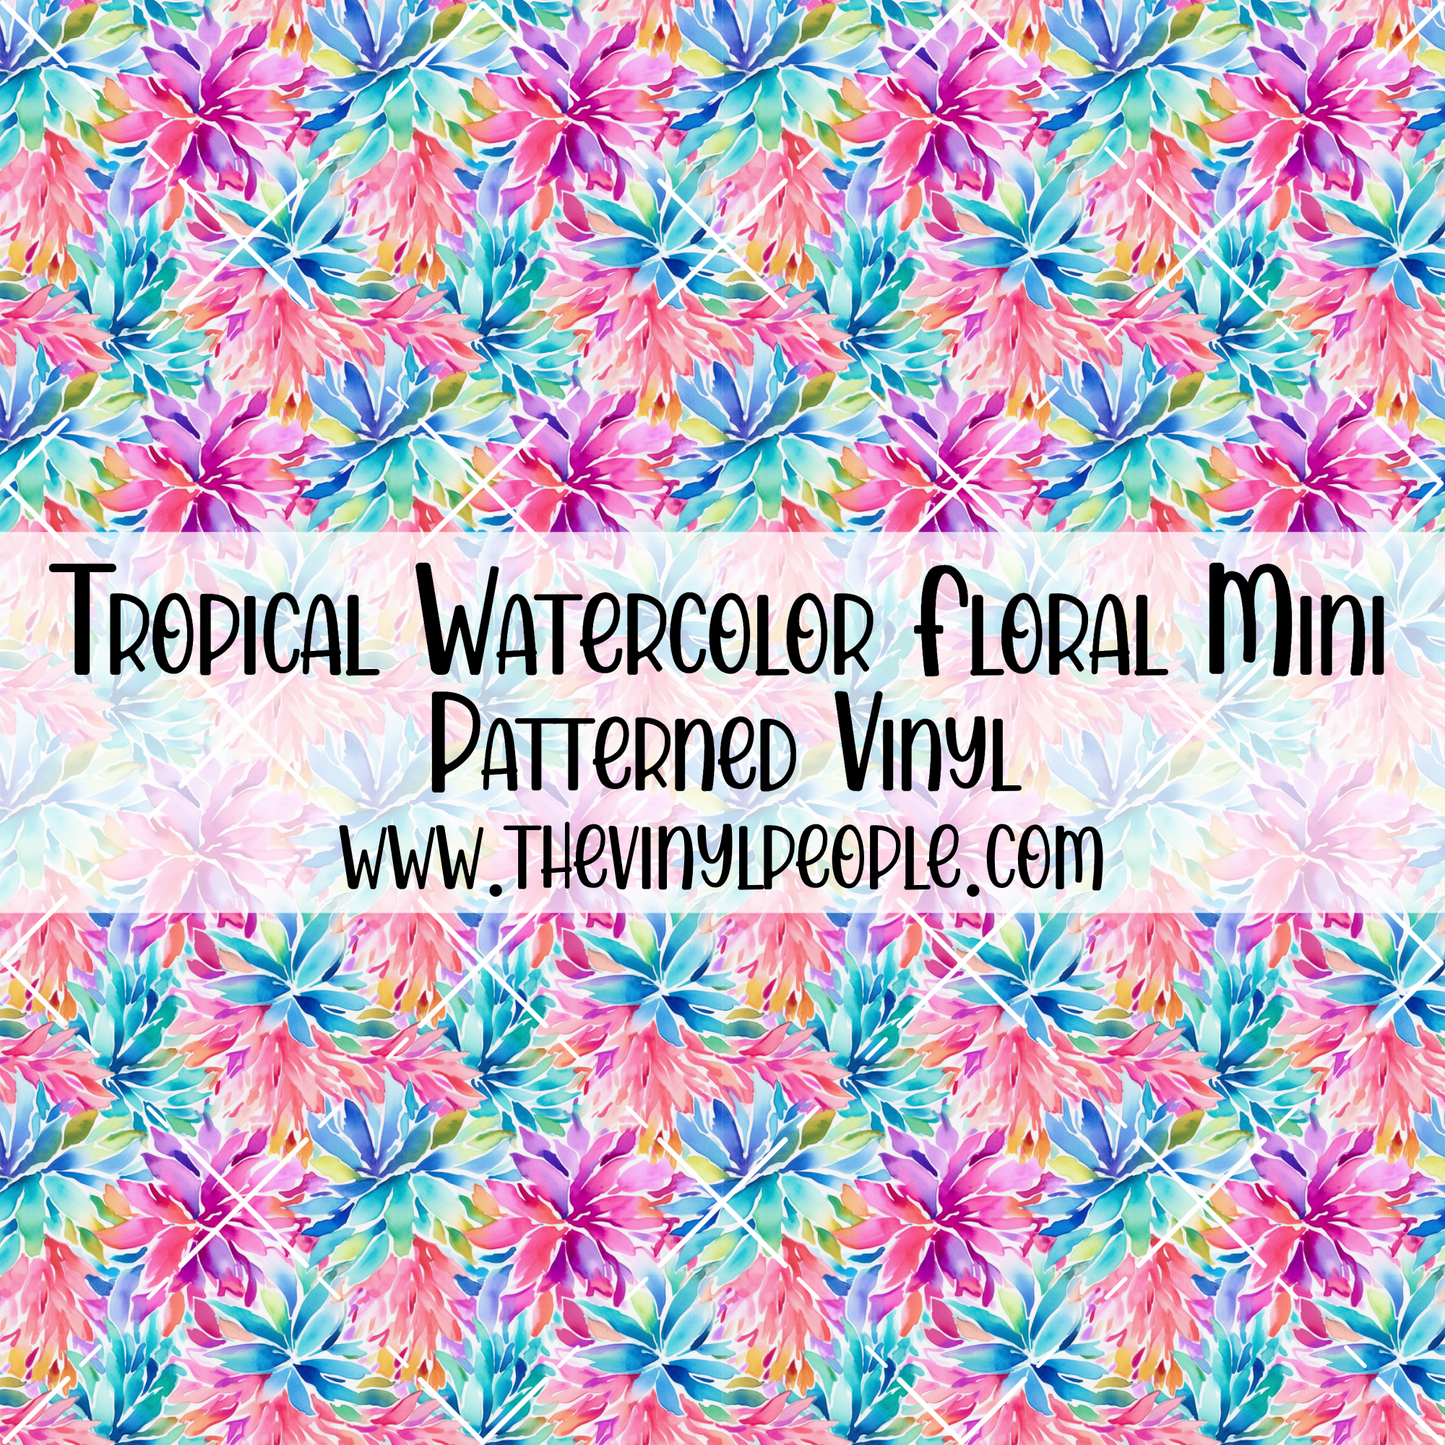 Tropical Watercolor Floral Patterned Vinyl